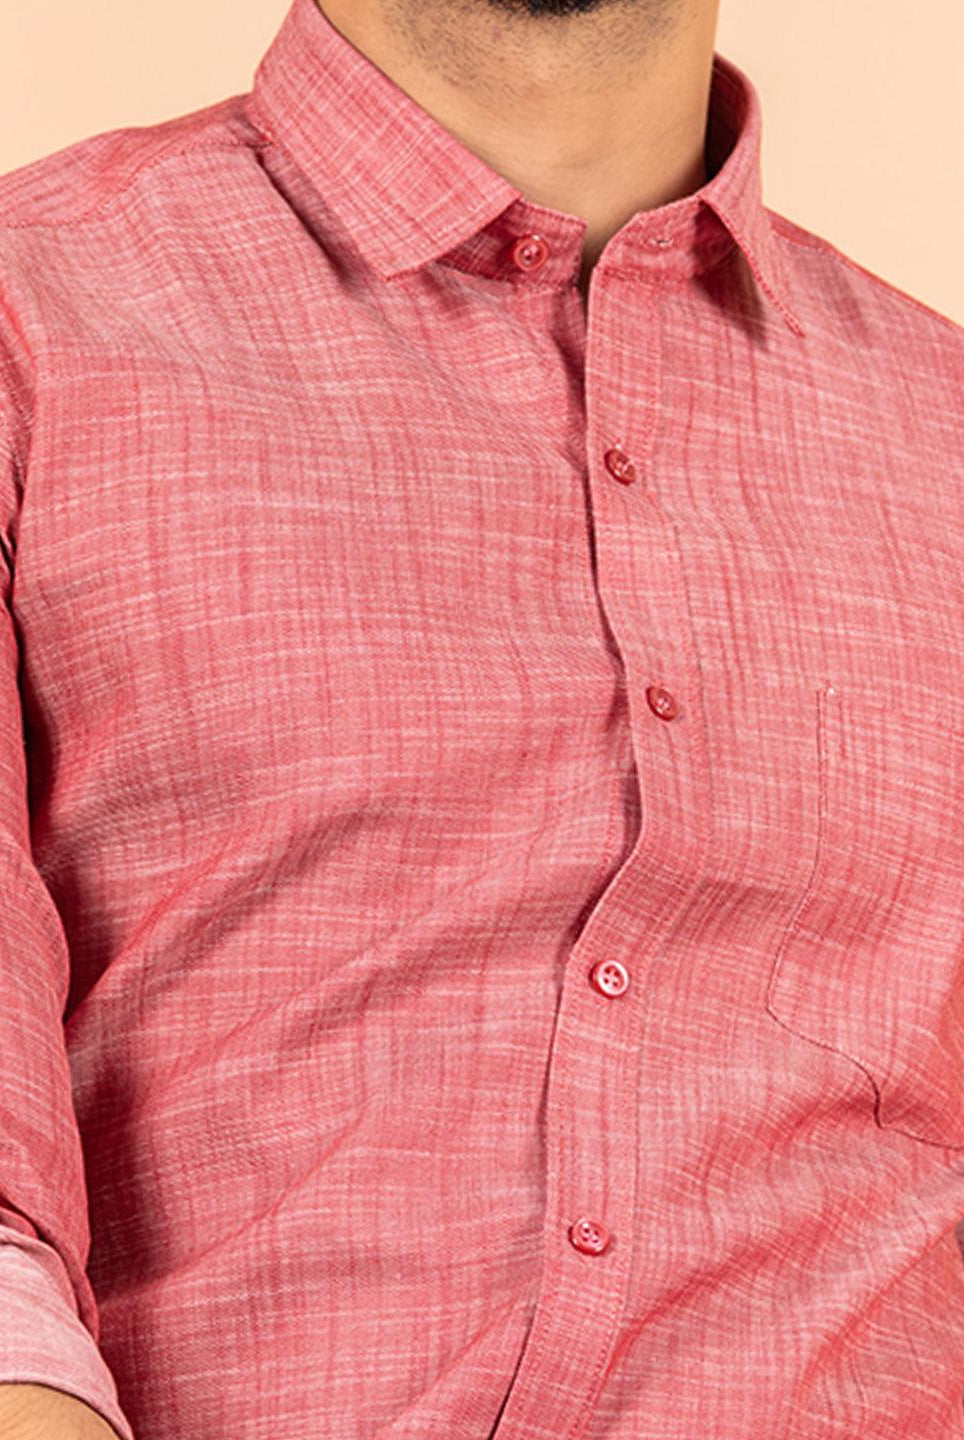 Pink denim shirt